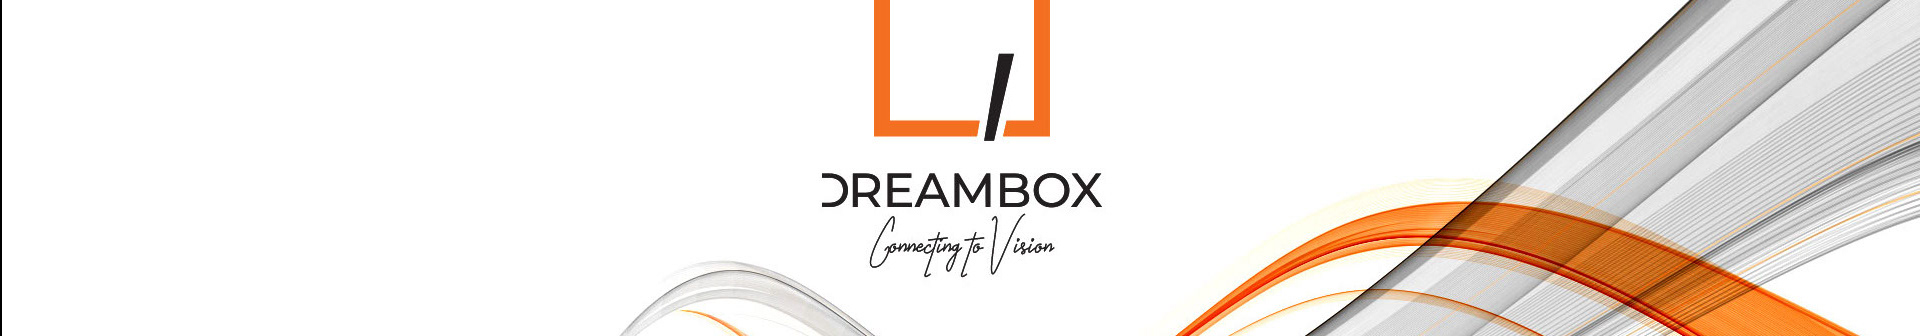 Dream Box Global's profile banner